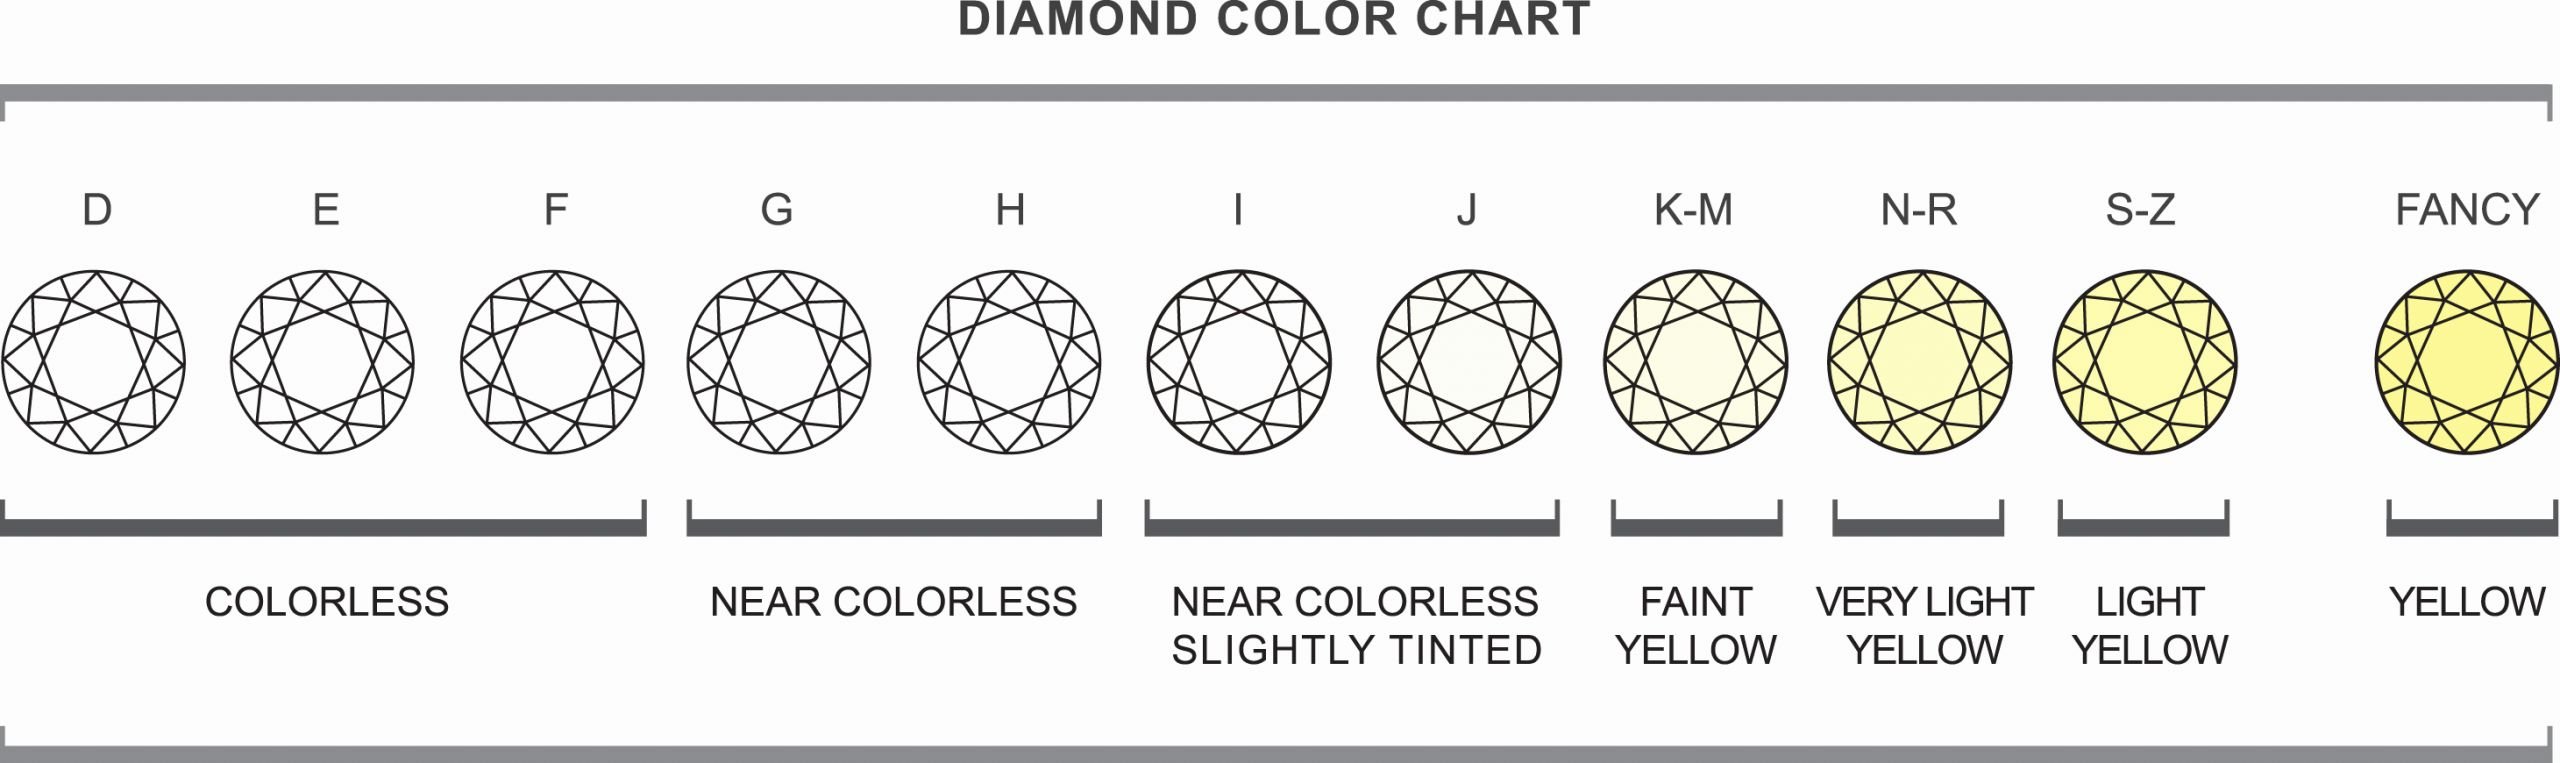 Diamond Rating Chart Fresh Diamond Seller S Guide Tag Archive